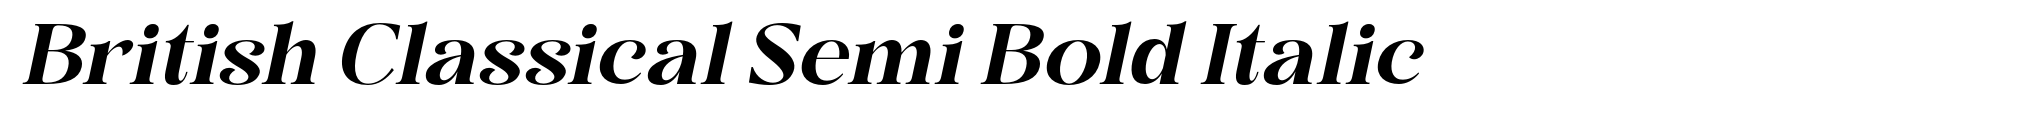 British Classical Semi Bold Italic image